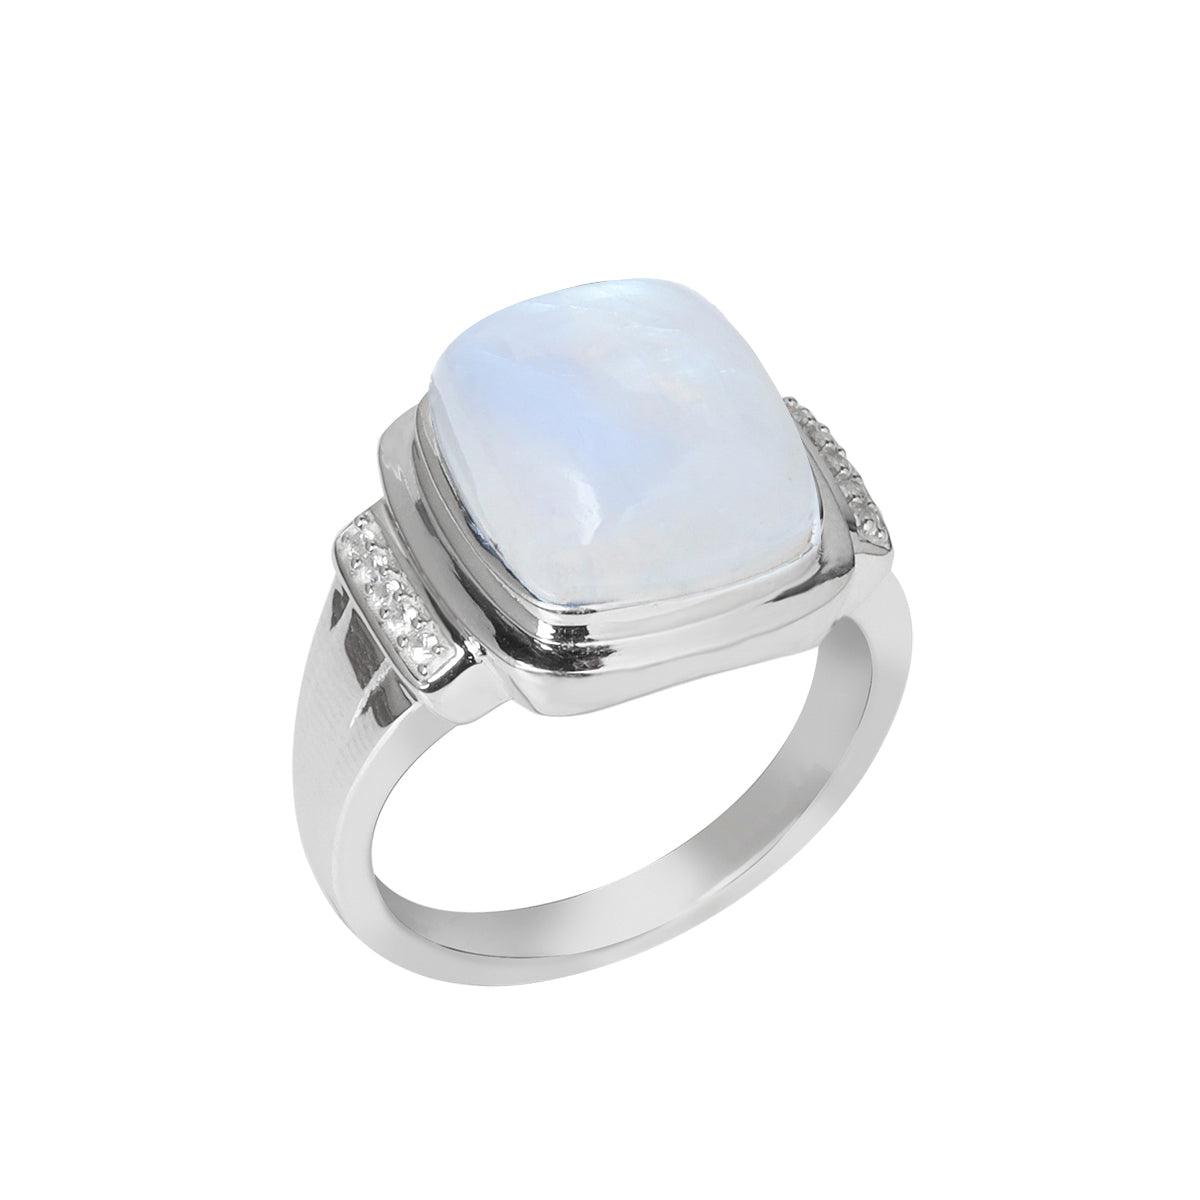 Rainbow Moonstone & White Zircon Ring in 925 Sterling Silver - YoTreasure